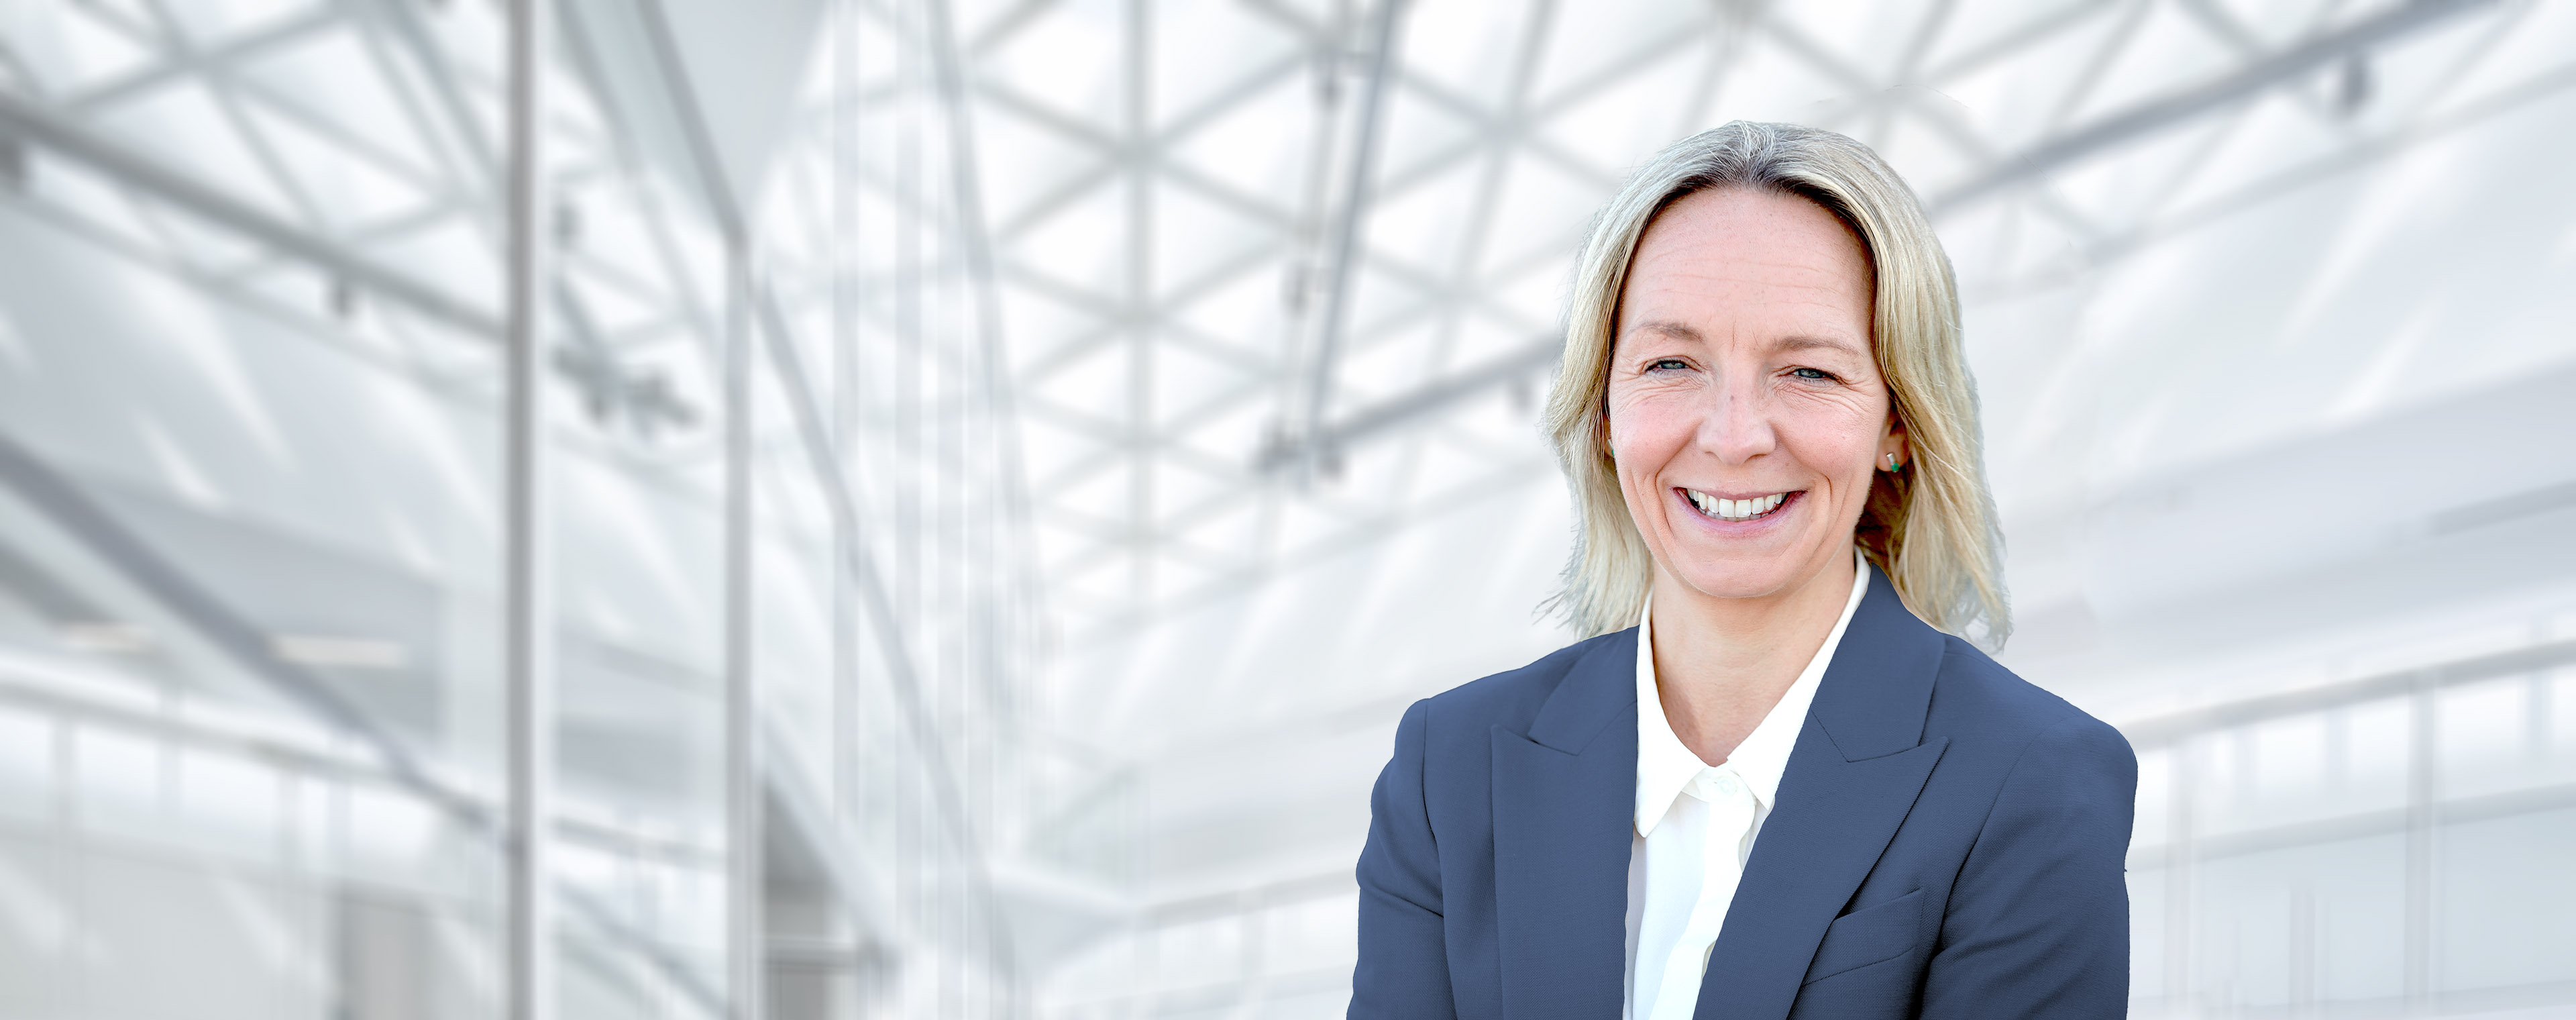 Lesley Larg | Managing Partner at Thorntons